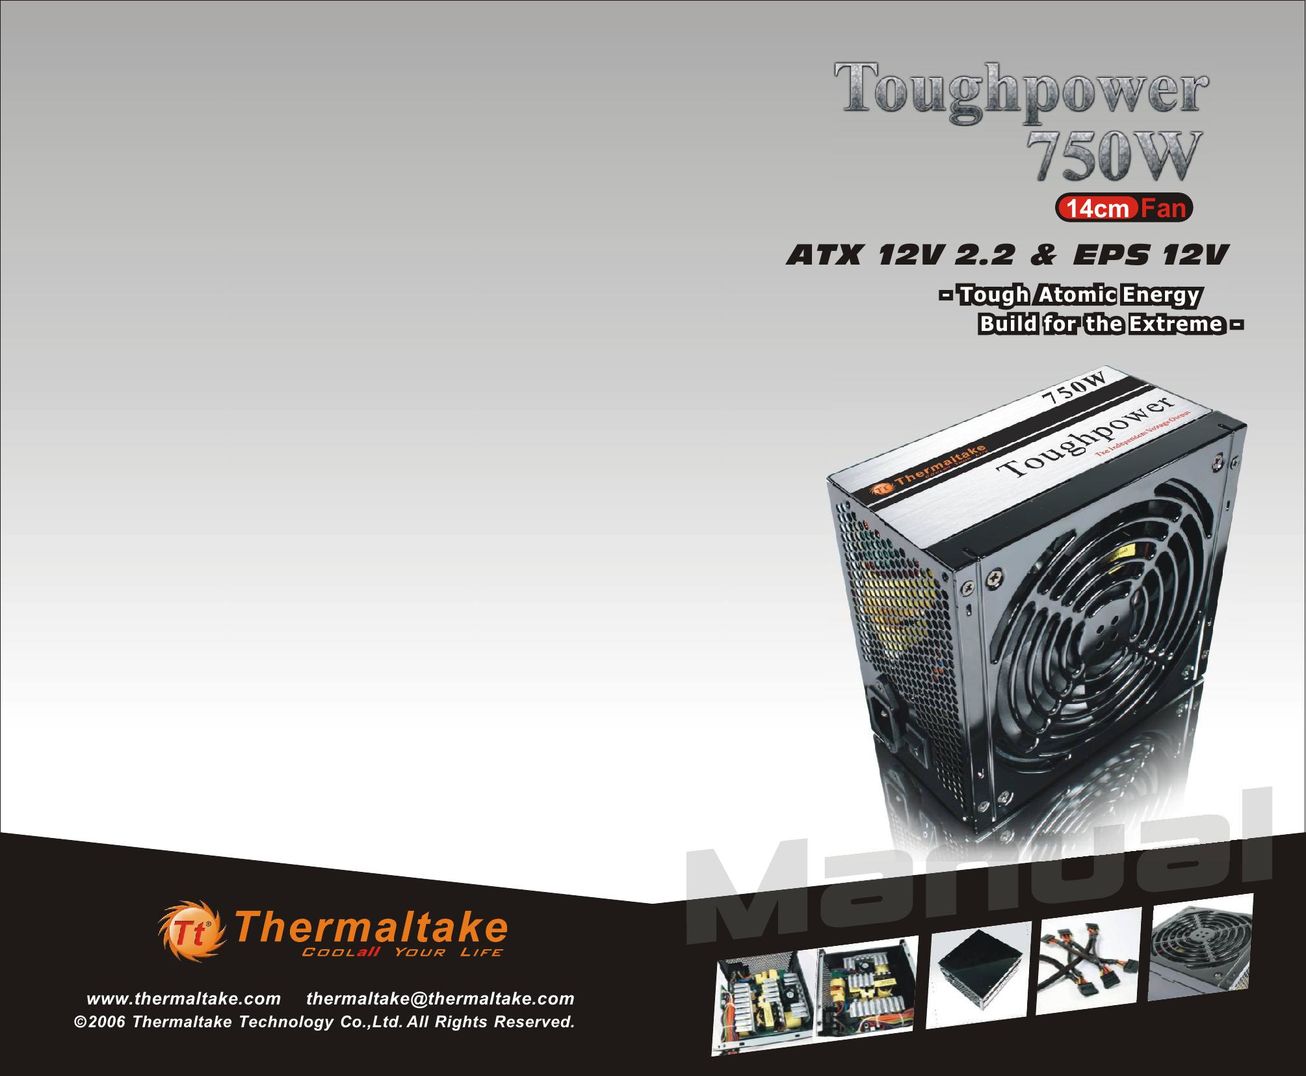 Thermaltake ATX 12V 2.2 Power Supply User Manual